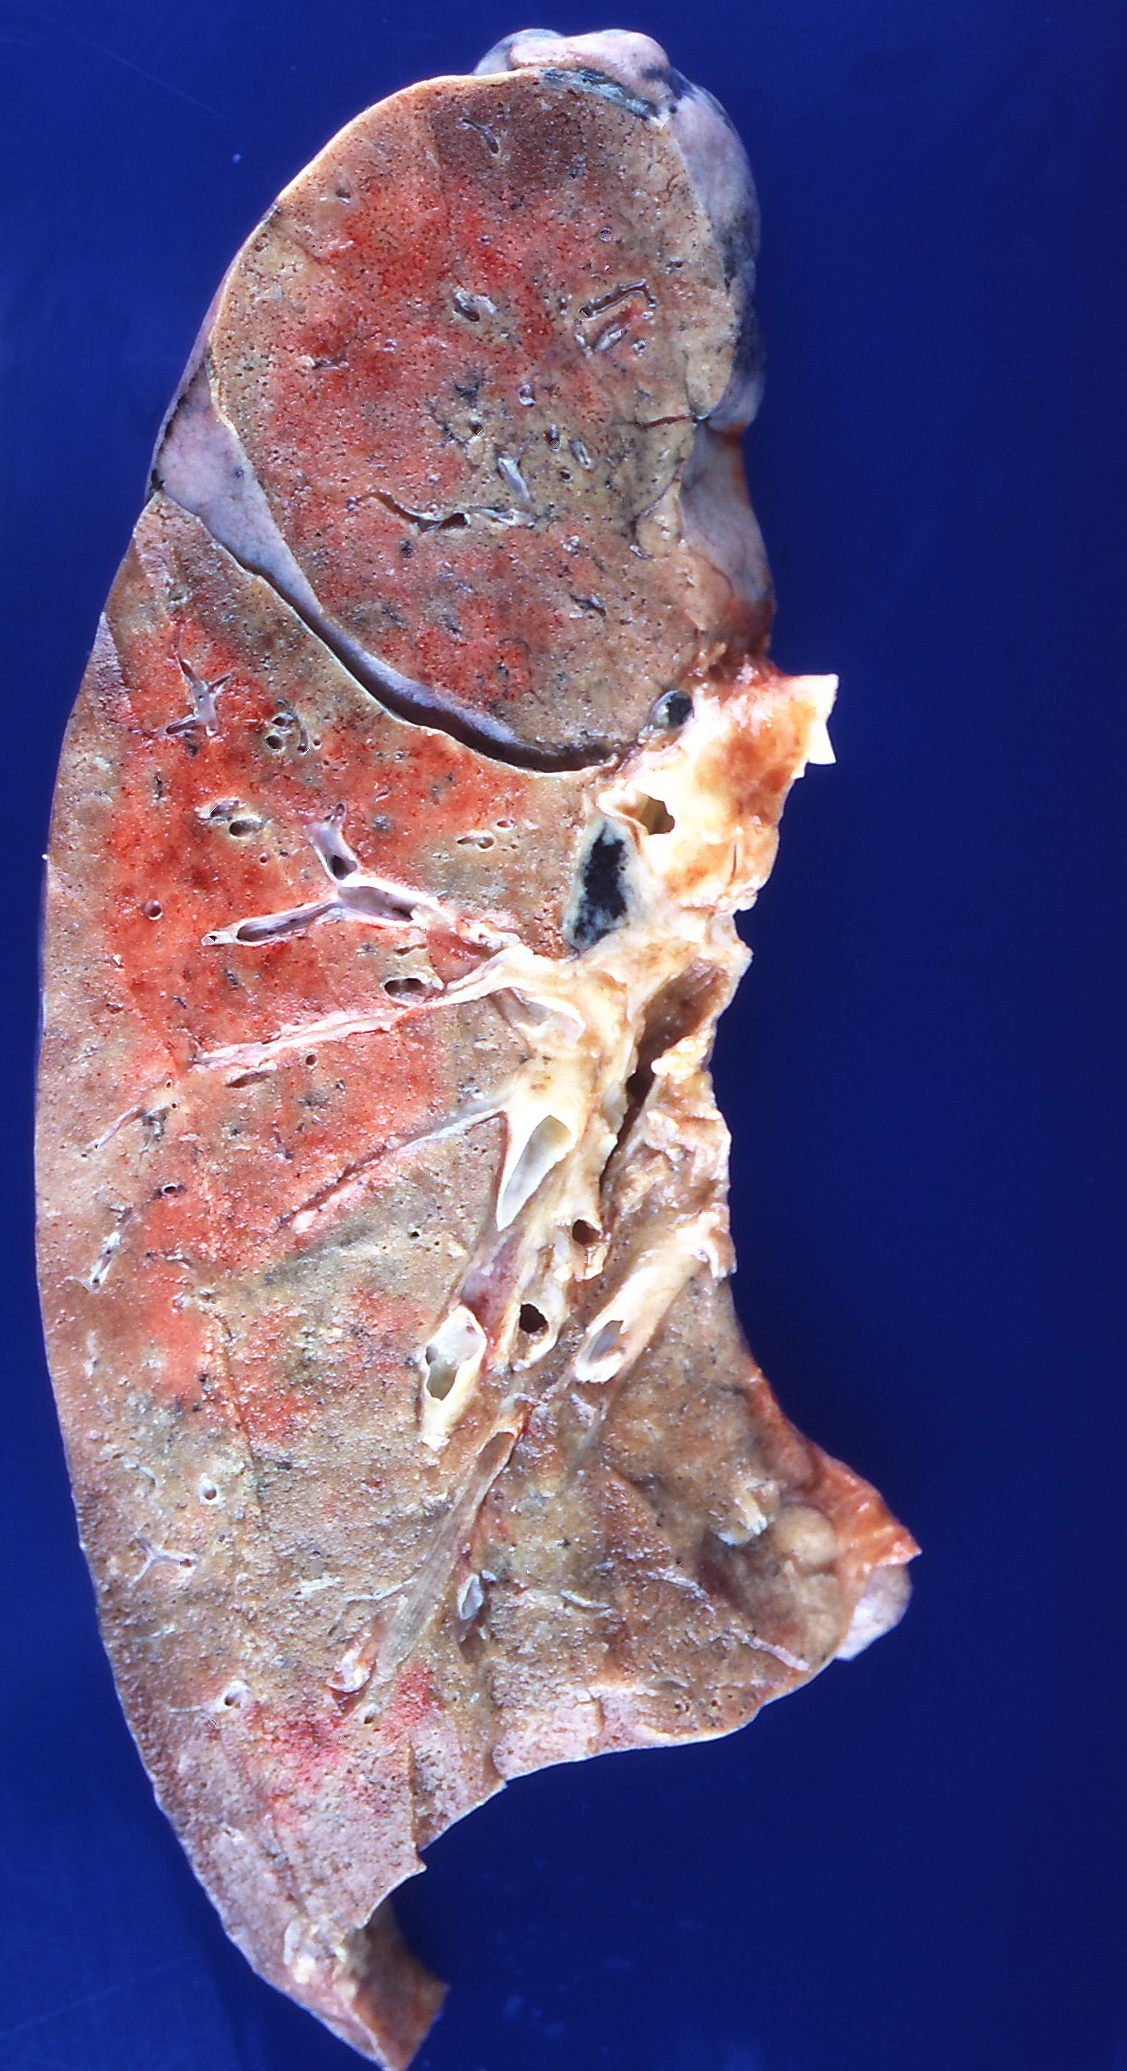 Radiation-induced lung injury - Wikipedia